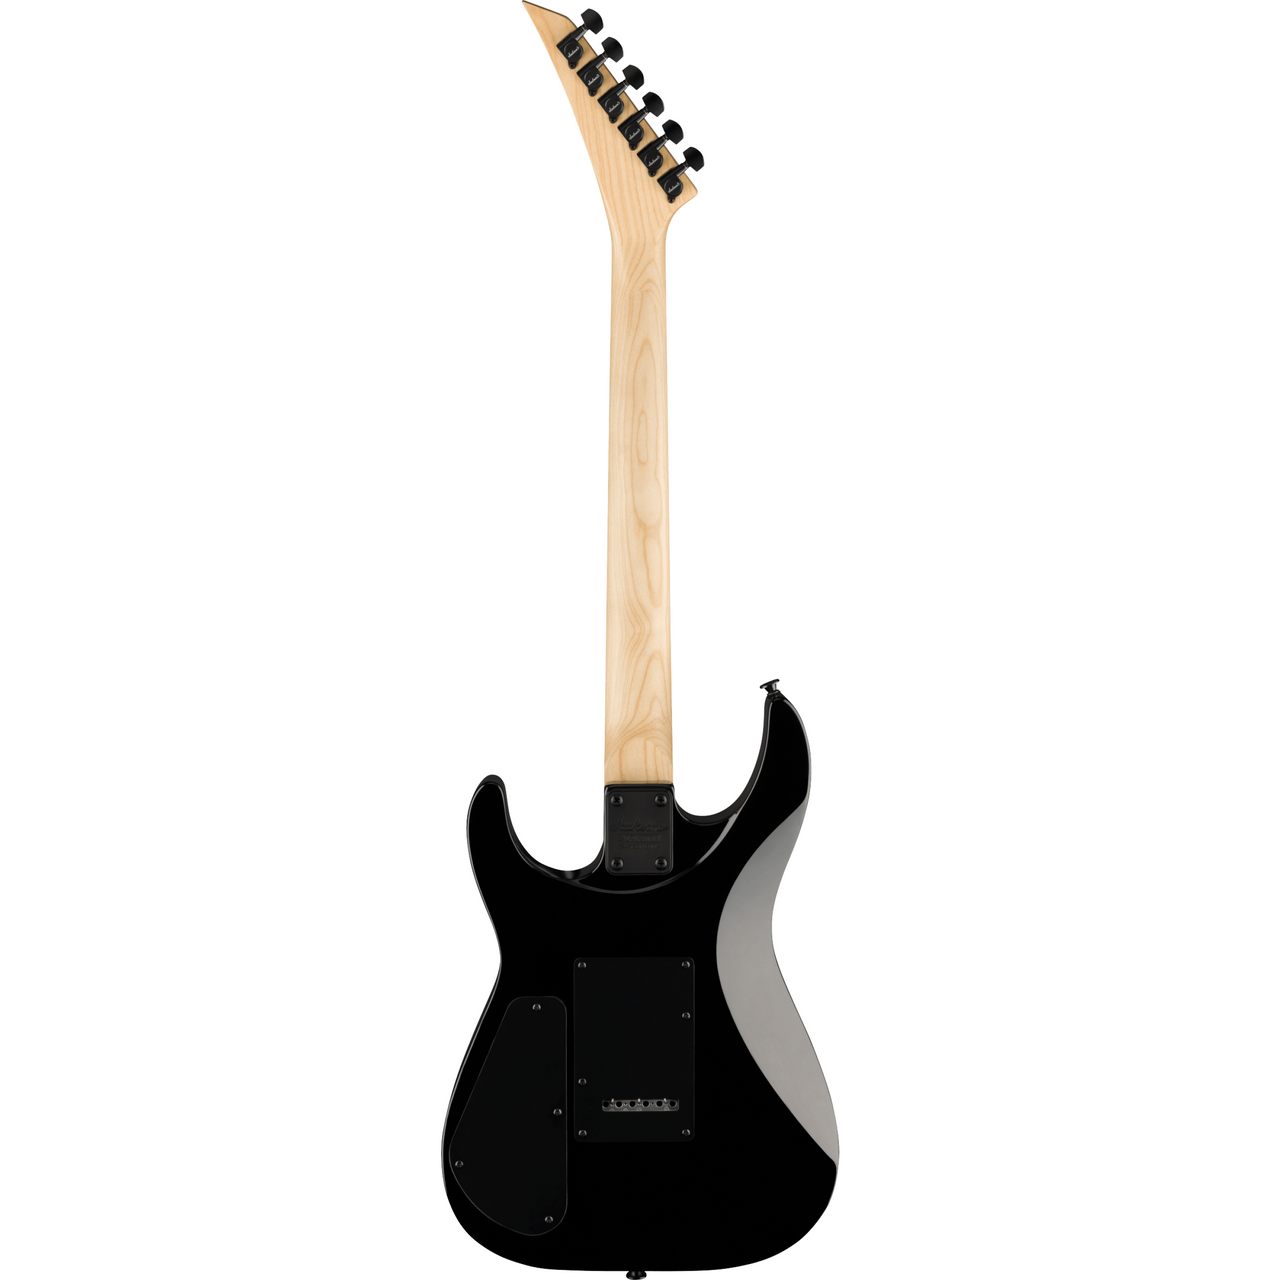 Guitarra Electrica Jackson Serie Js Dinky Js20 Dkq 2p Transparent Black Burst 2910211585